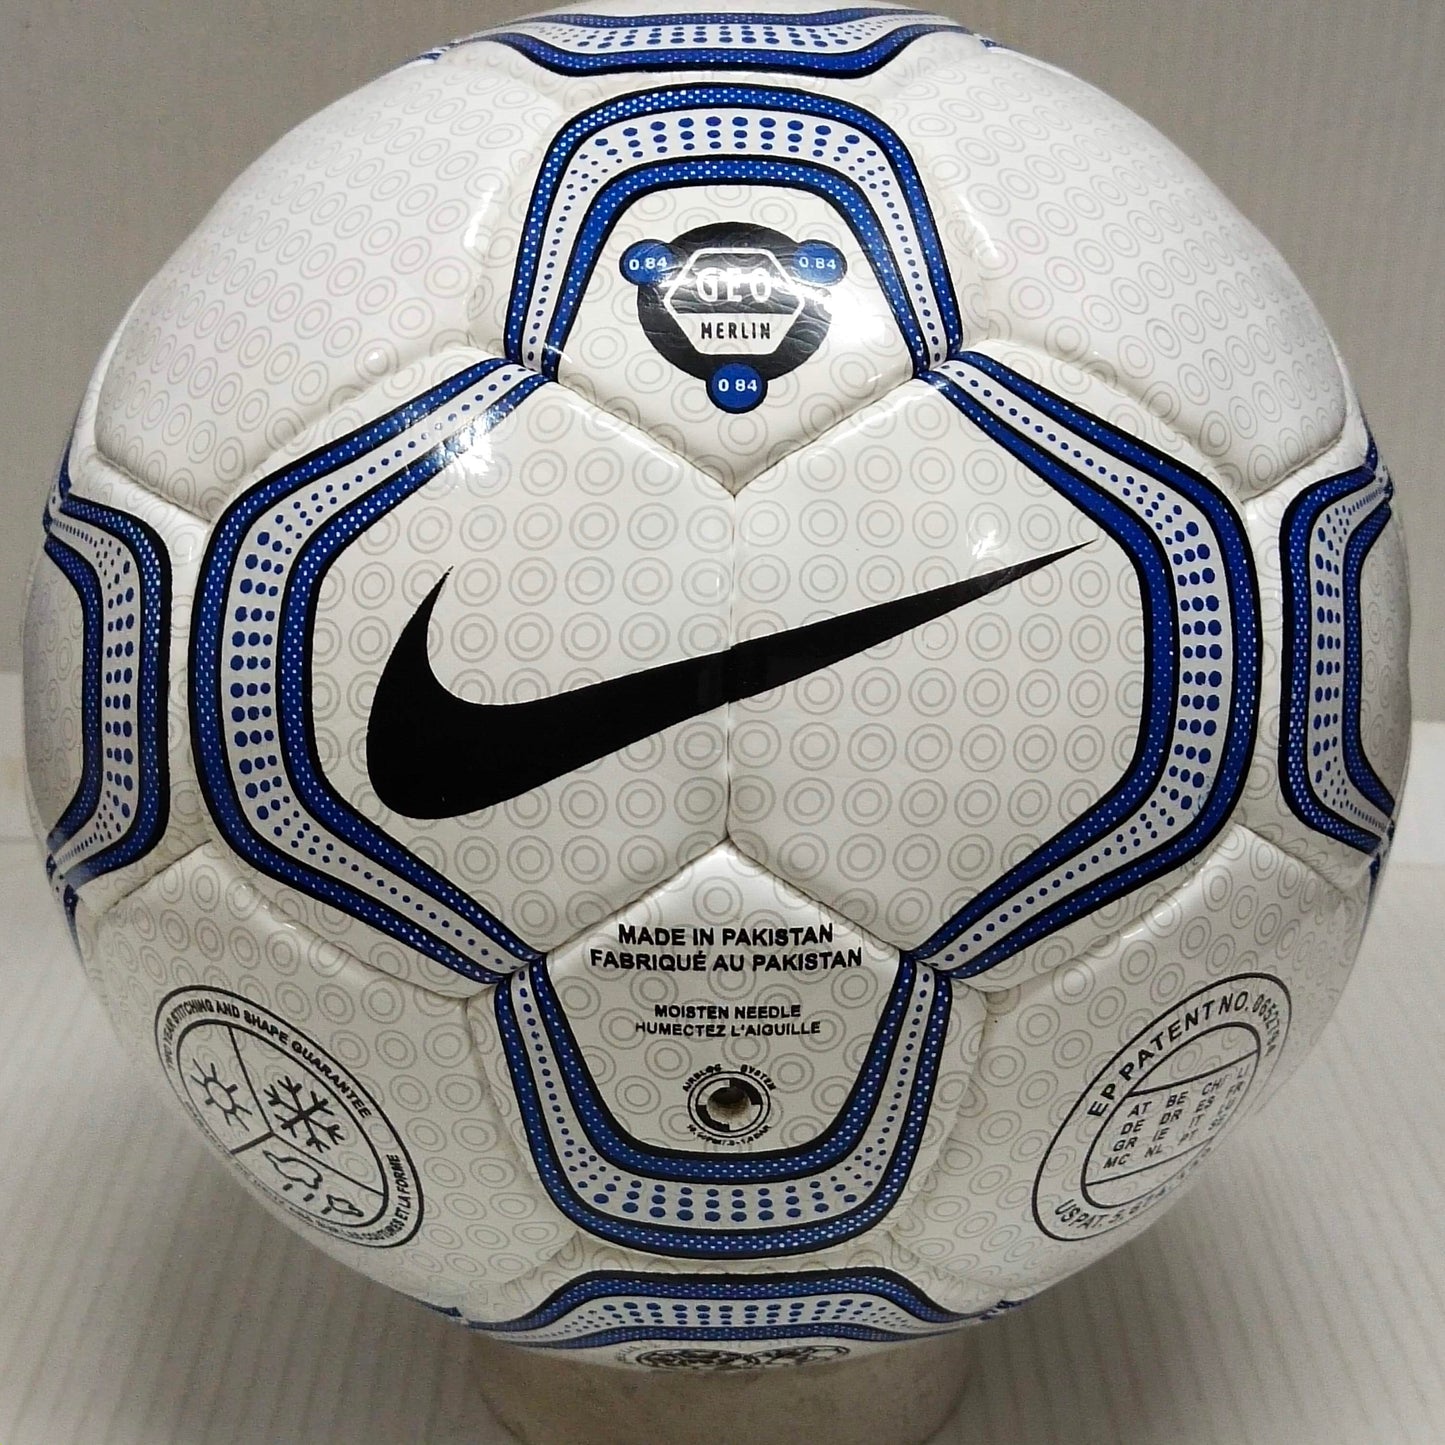 Nike Geo Merlin | 2000-2001 | UEFA Champions League Ball | Size 5 01